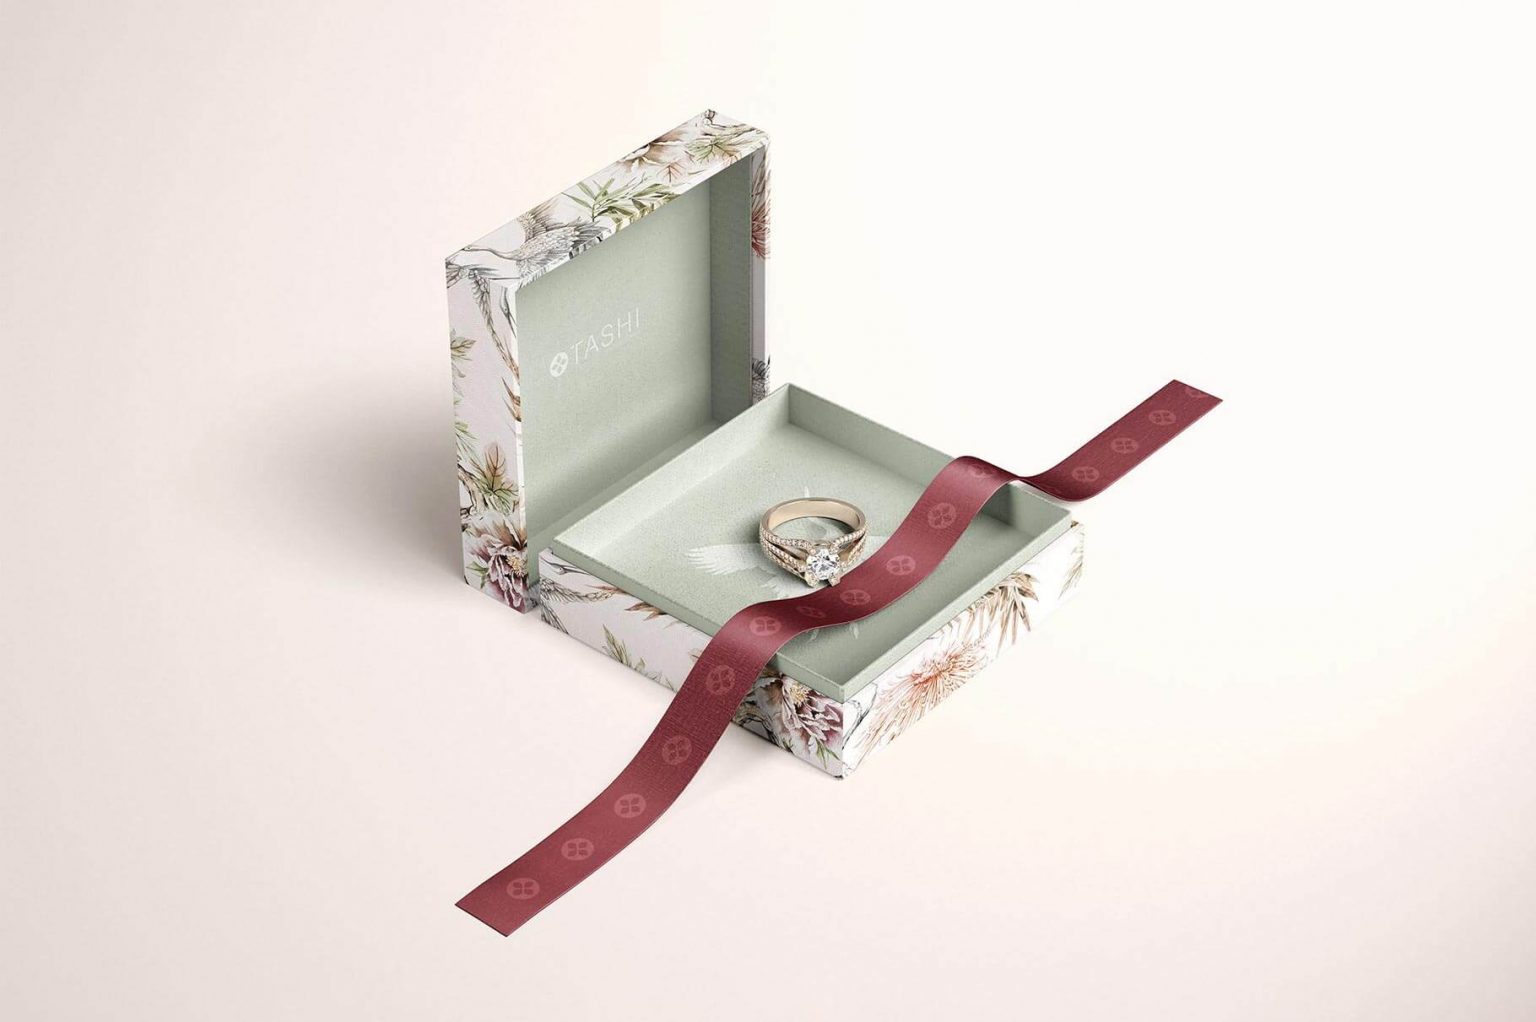 Download 50+ Best Gift Box Mockups — Free & Premium Templates - The Designest